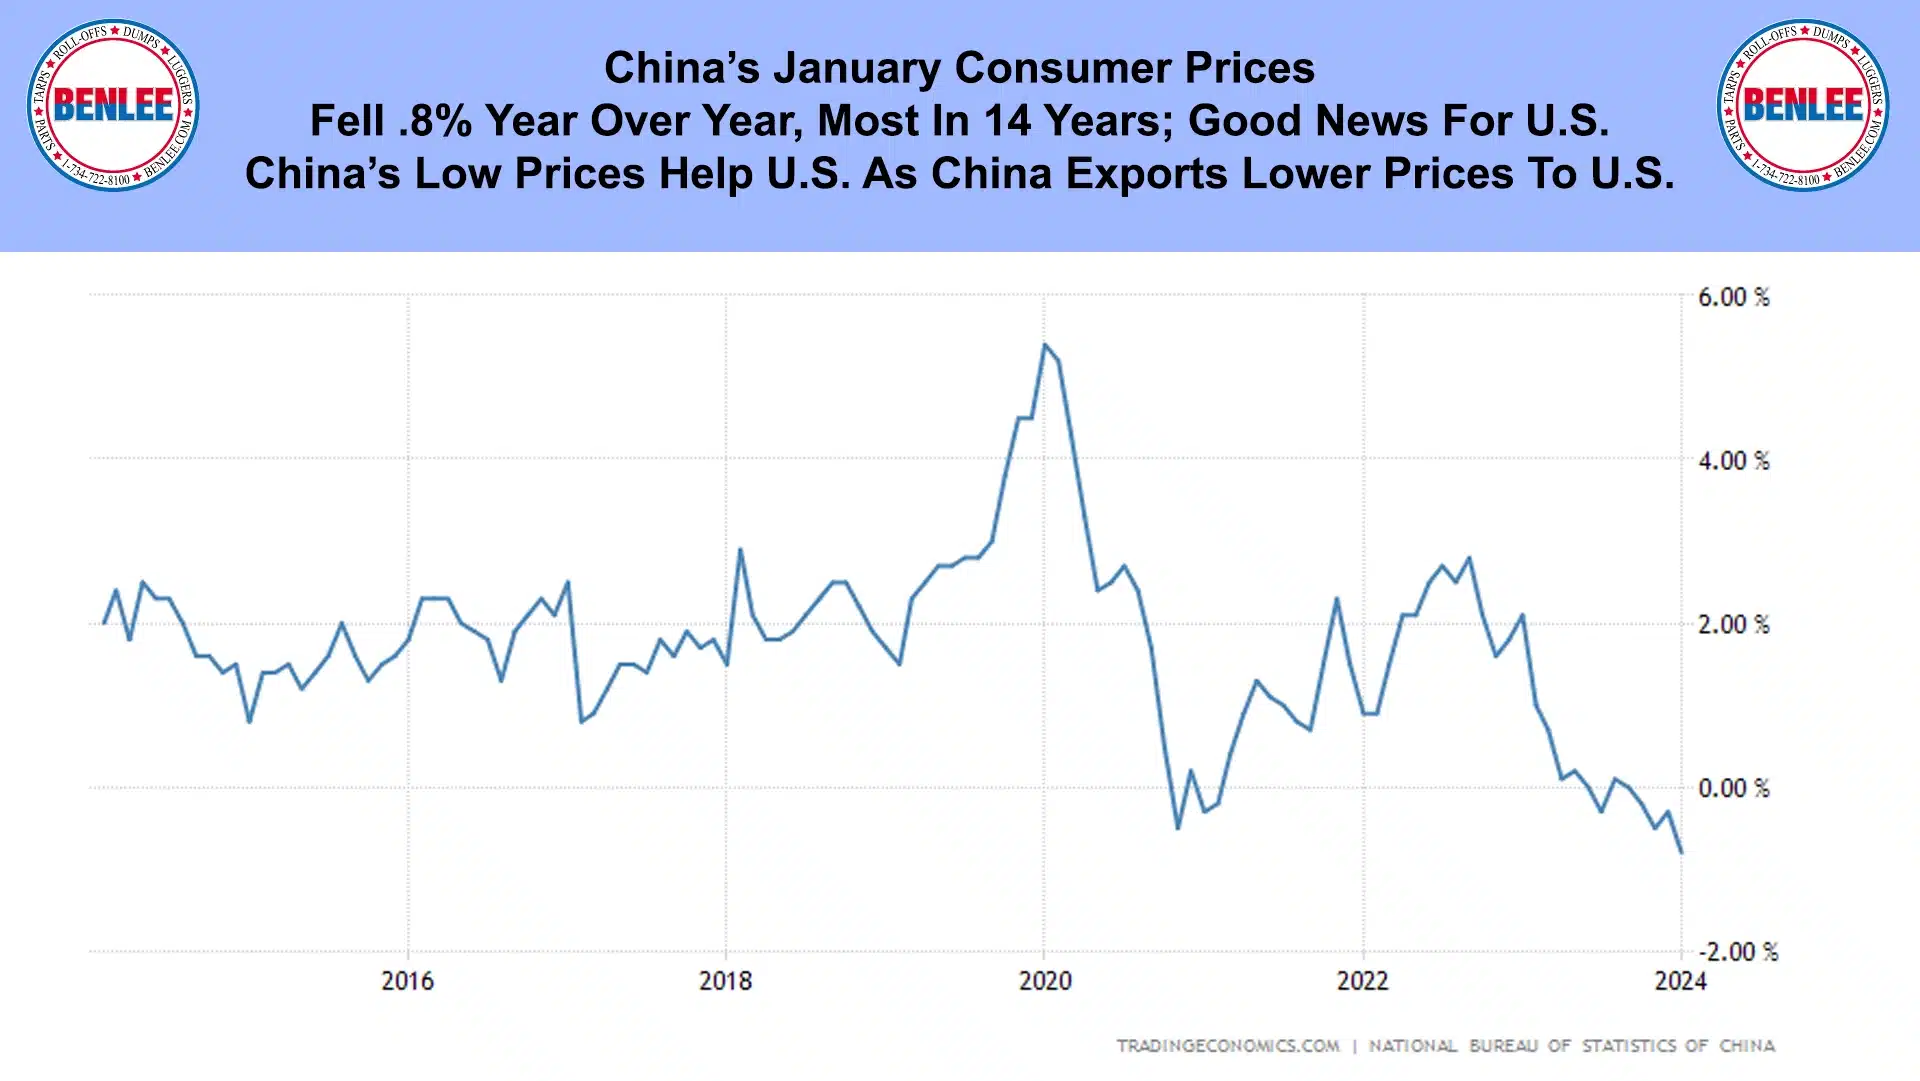 China's January Consumer Prices